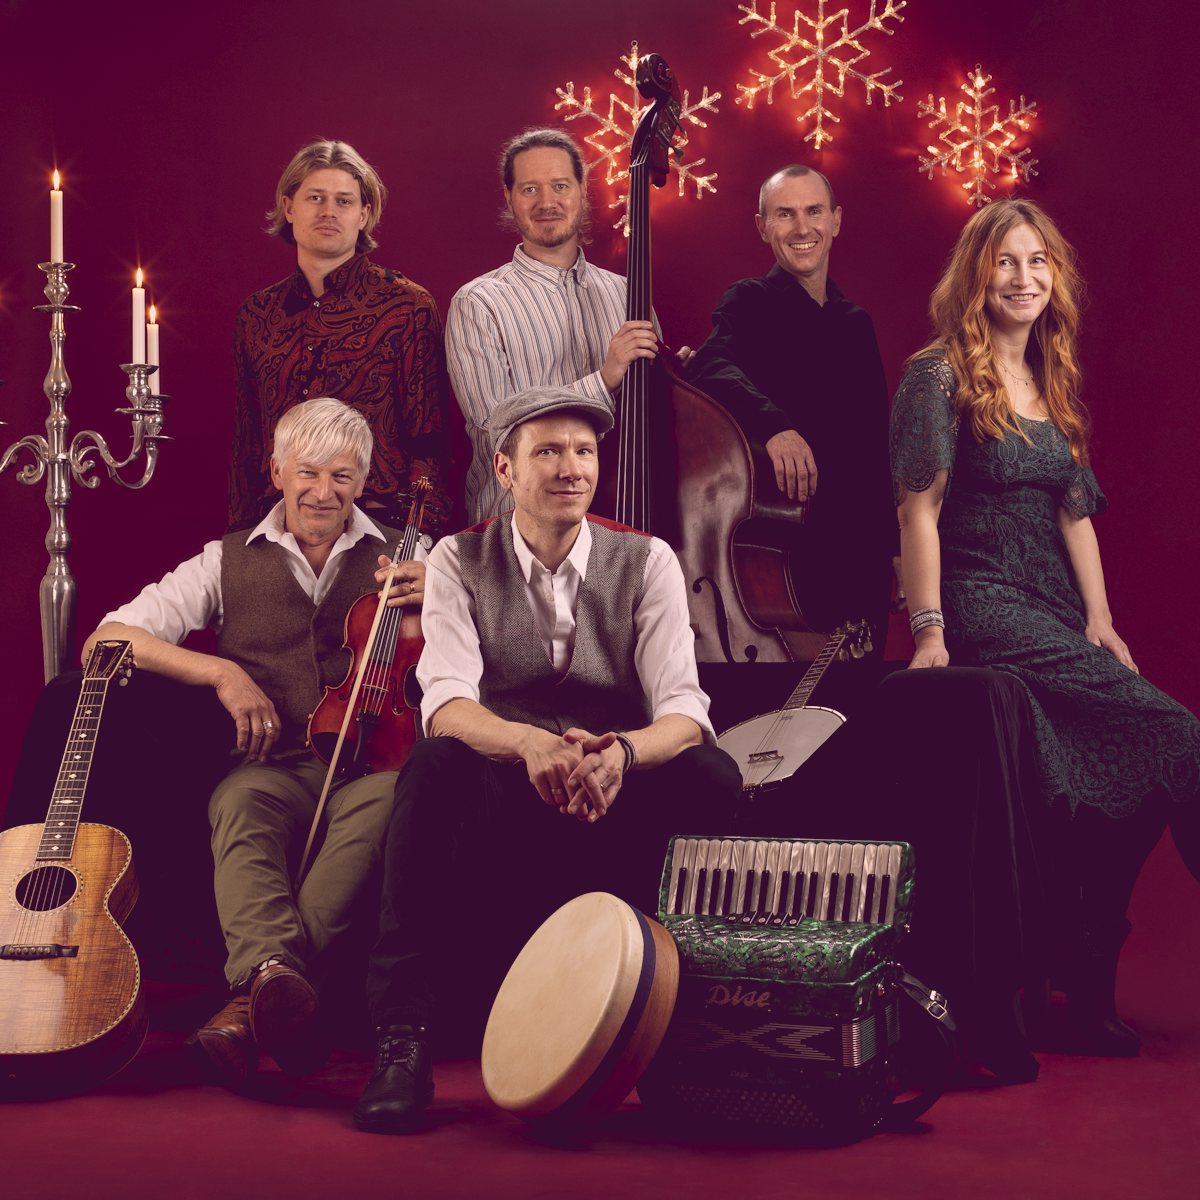 Biljetter till Celtic Christmas med West of Eden – Kulturaktiebolaget